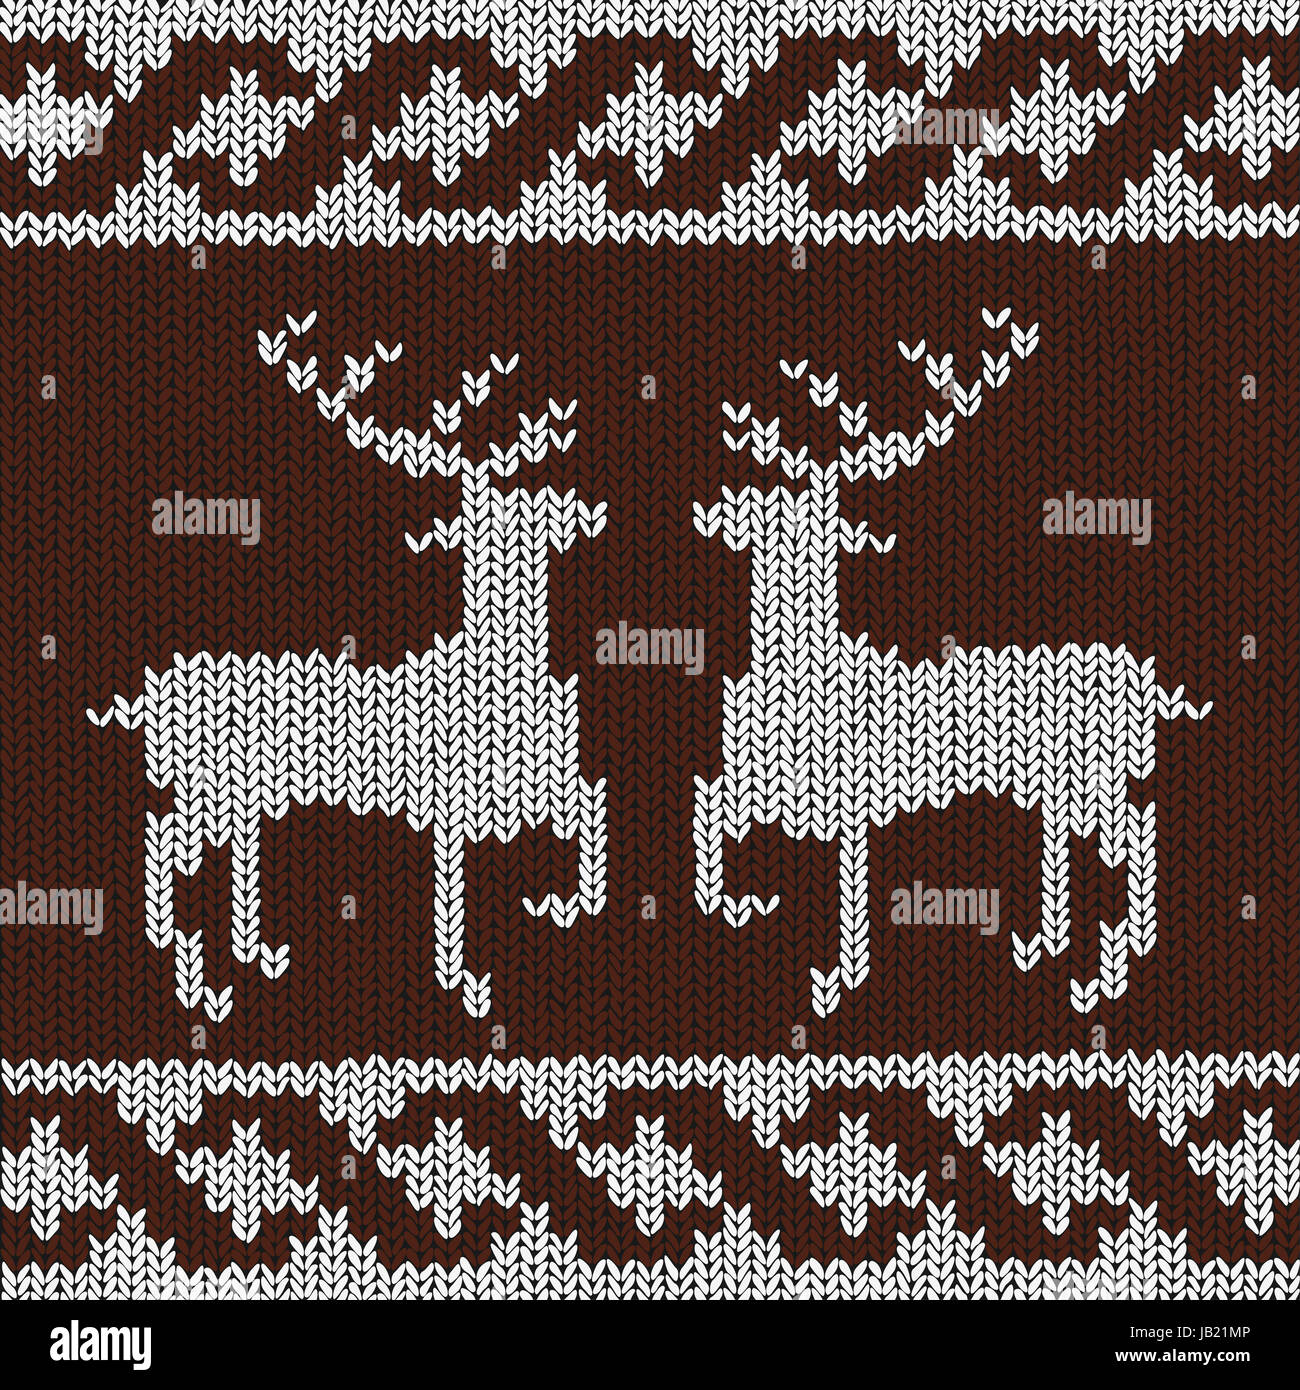 norwegian knitting patterns Stock Photo